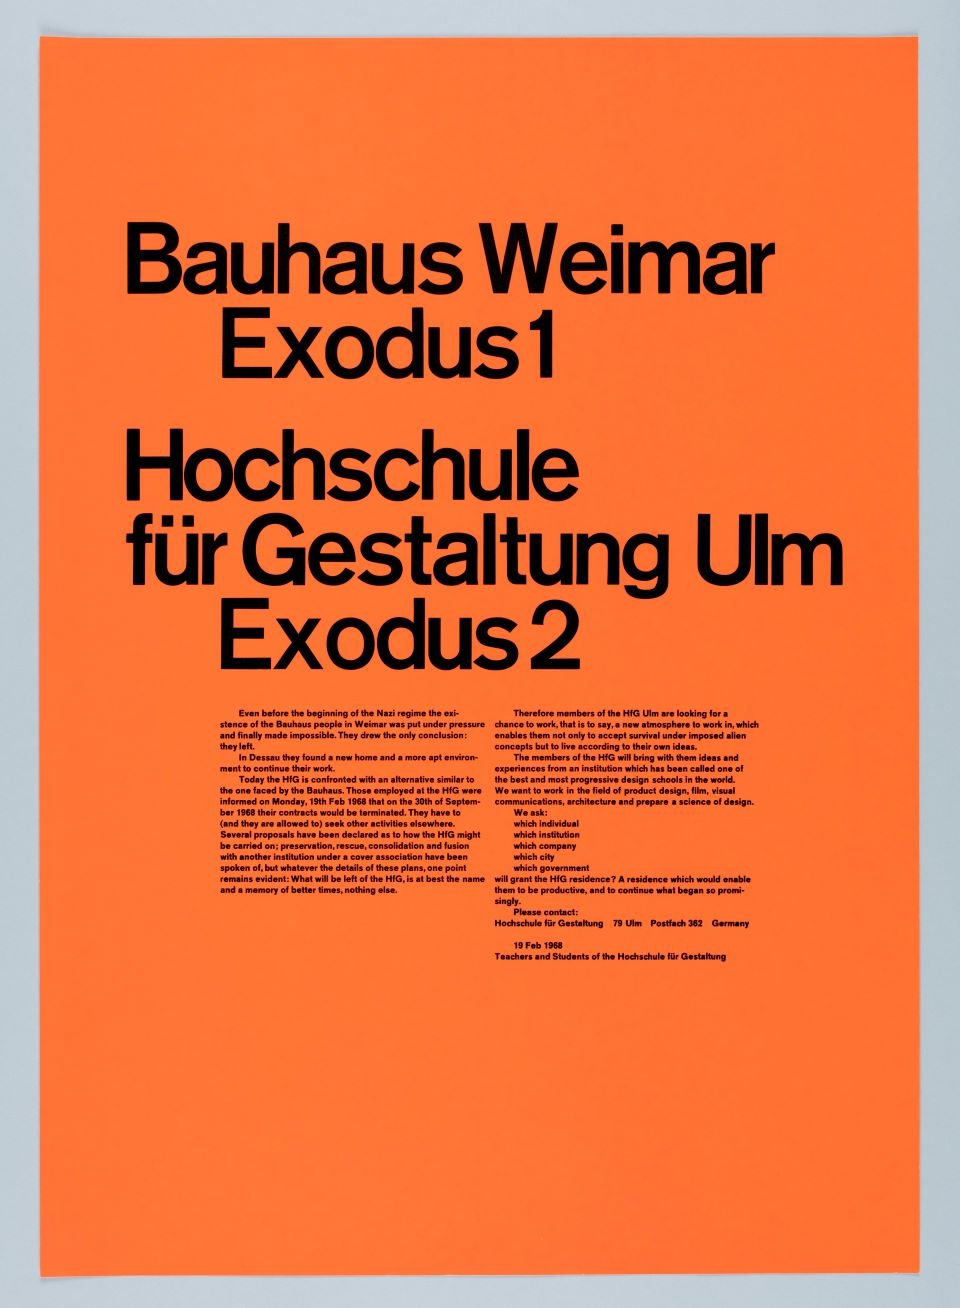 Bauhaus Weimar Exodus 1 (Museum Ulm/HfG-Archiv RR-P)